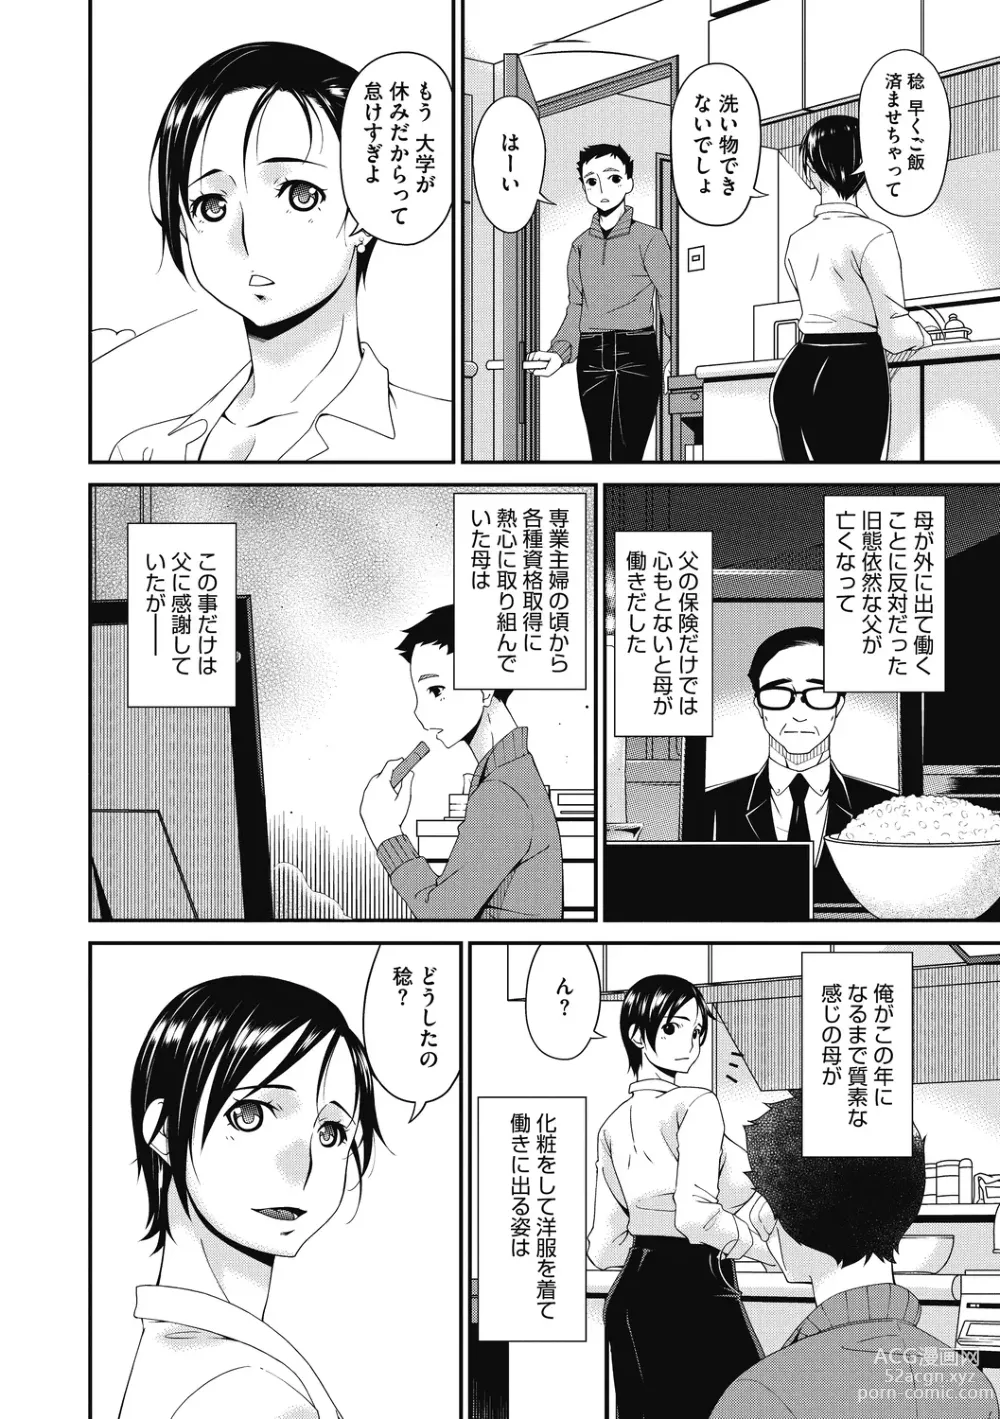 Page 4 of manga Doukoku no Ori